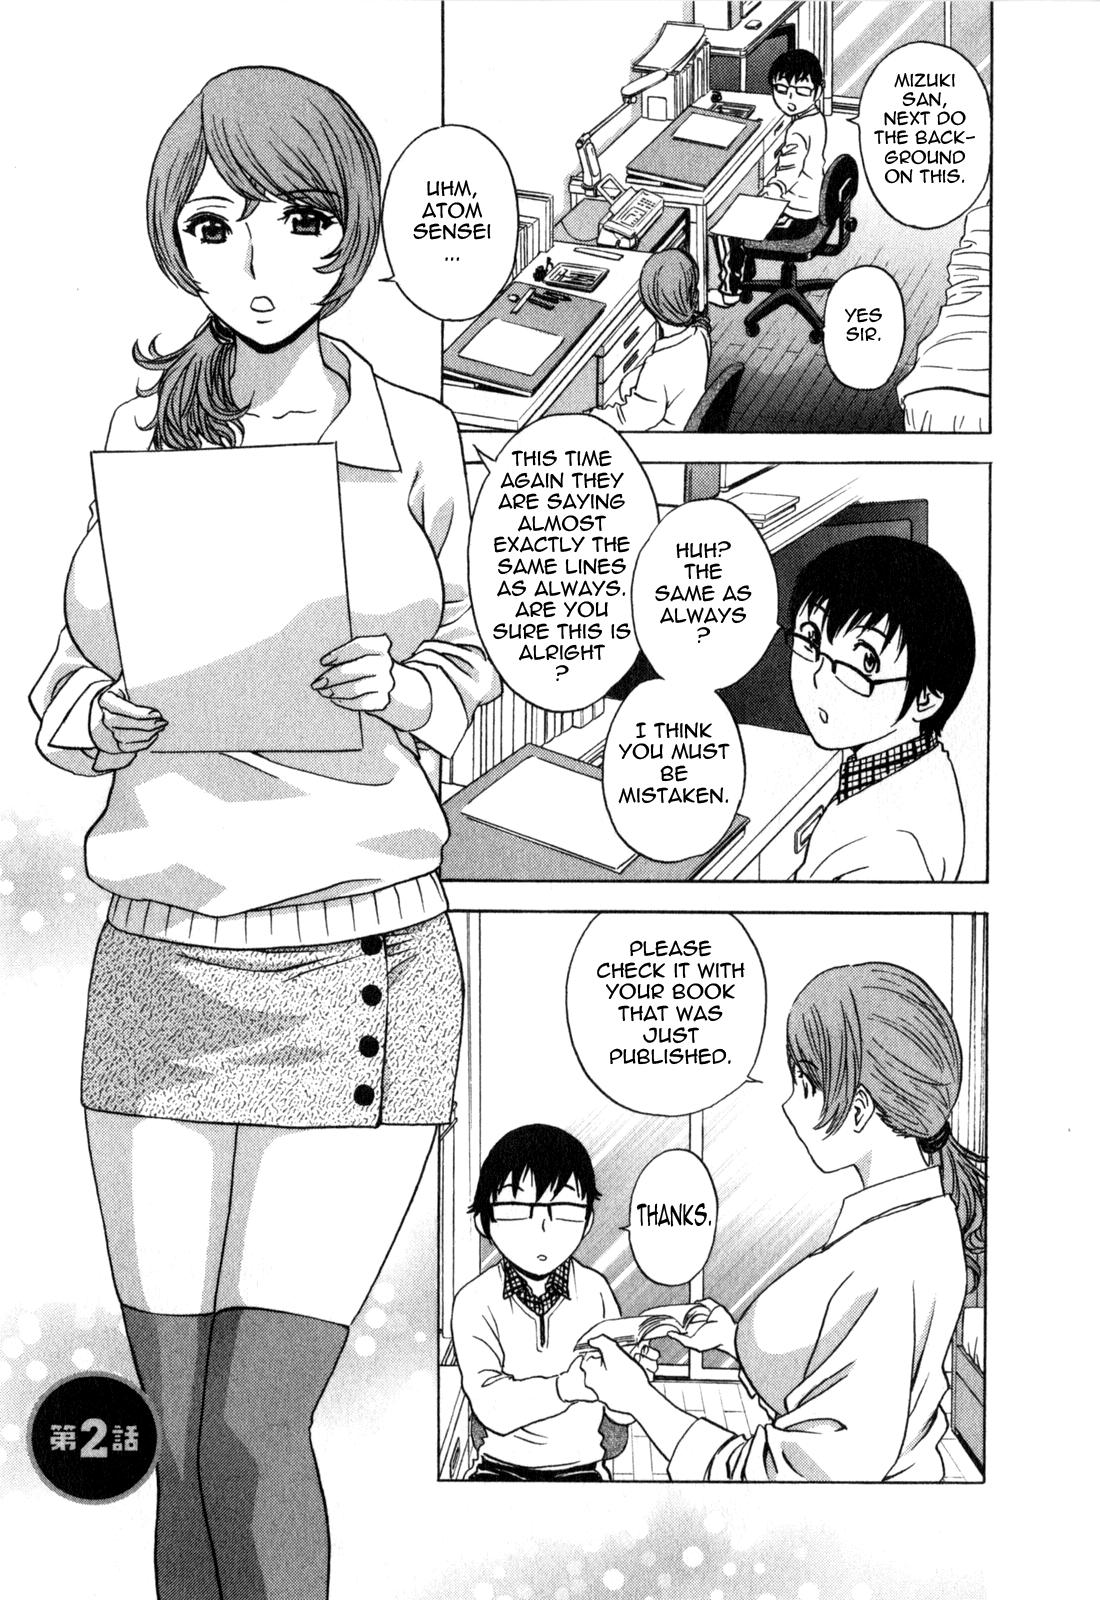 [Hidemaru] Life with Married Women Just Like a Manga 3 - Ch. 1-7 [English] {Tadanohito} 27